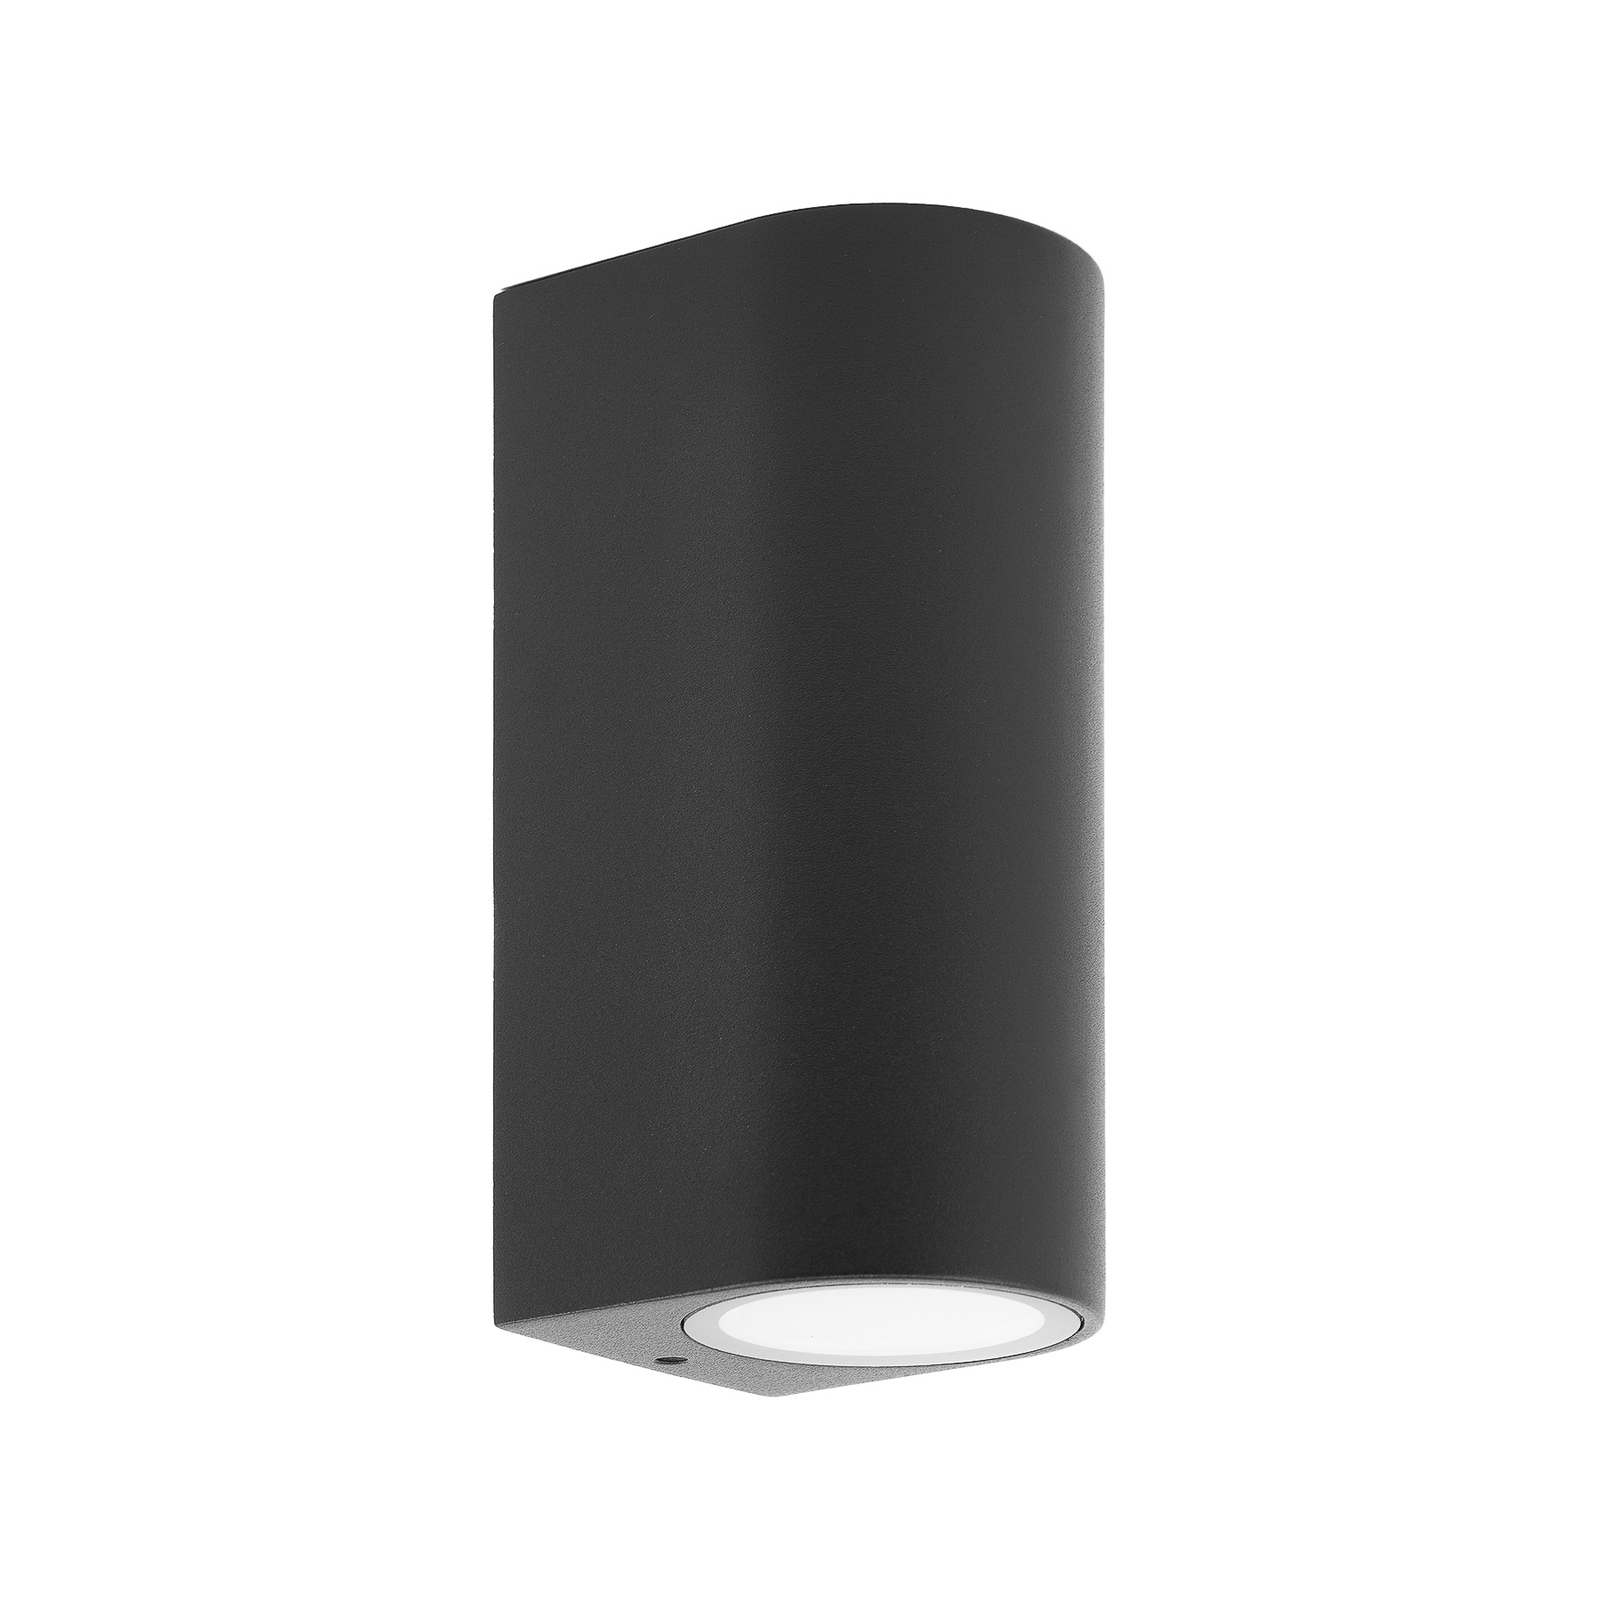 Prios outdoor wall light Tetje, black, round, 16 cm, set of 4